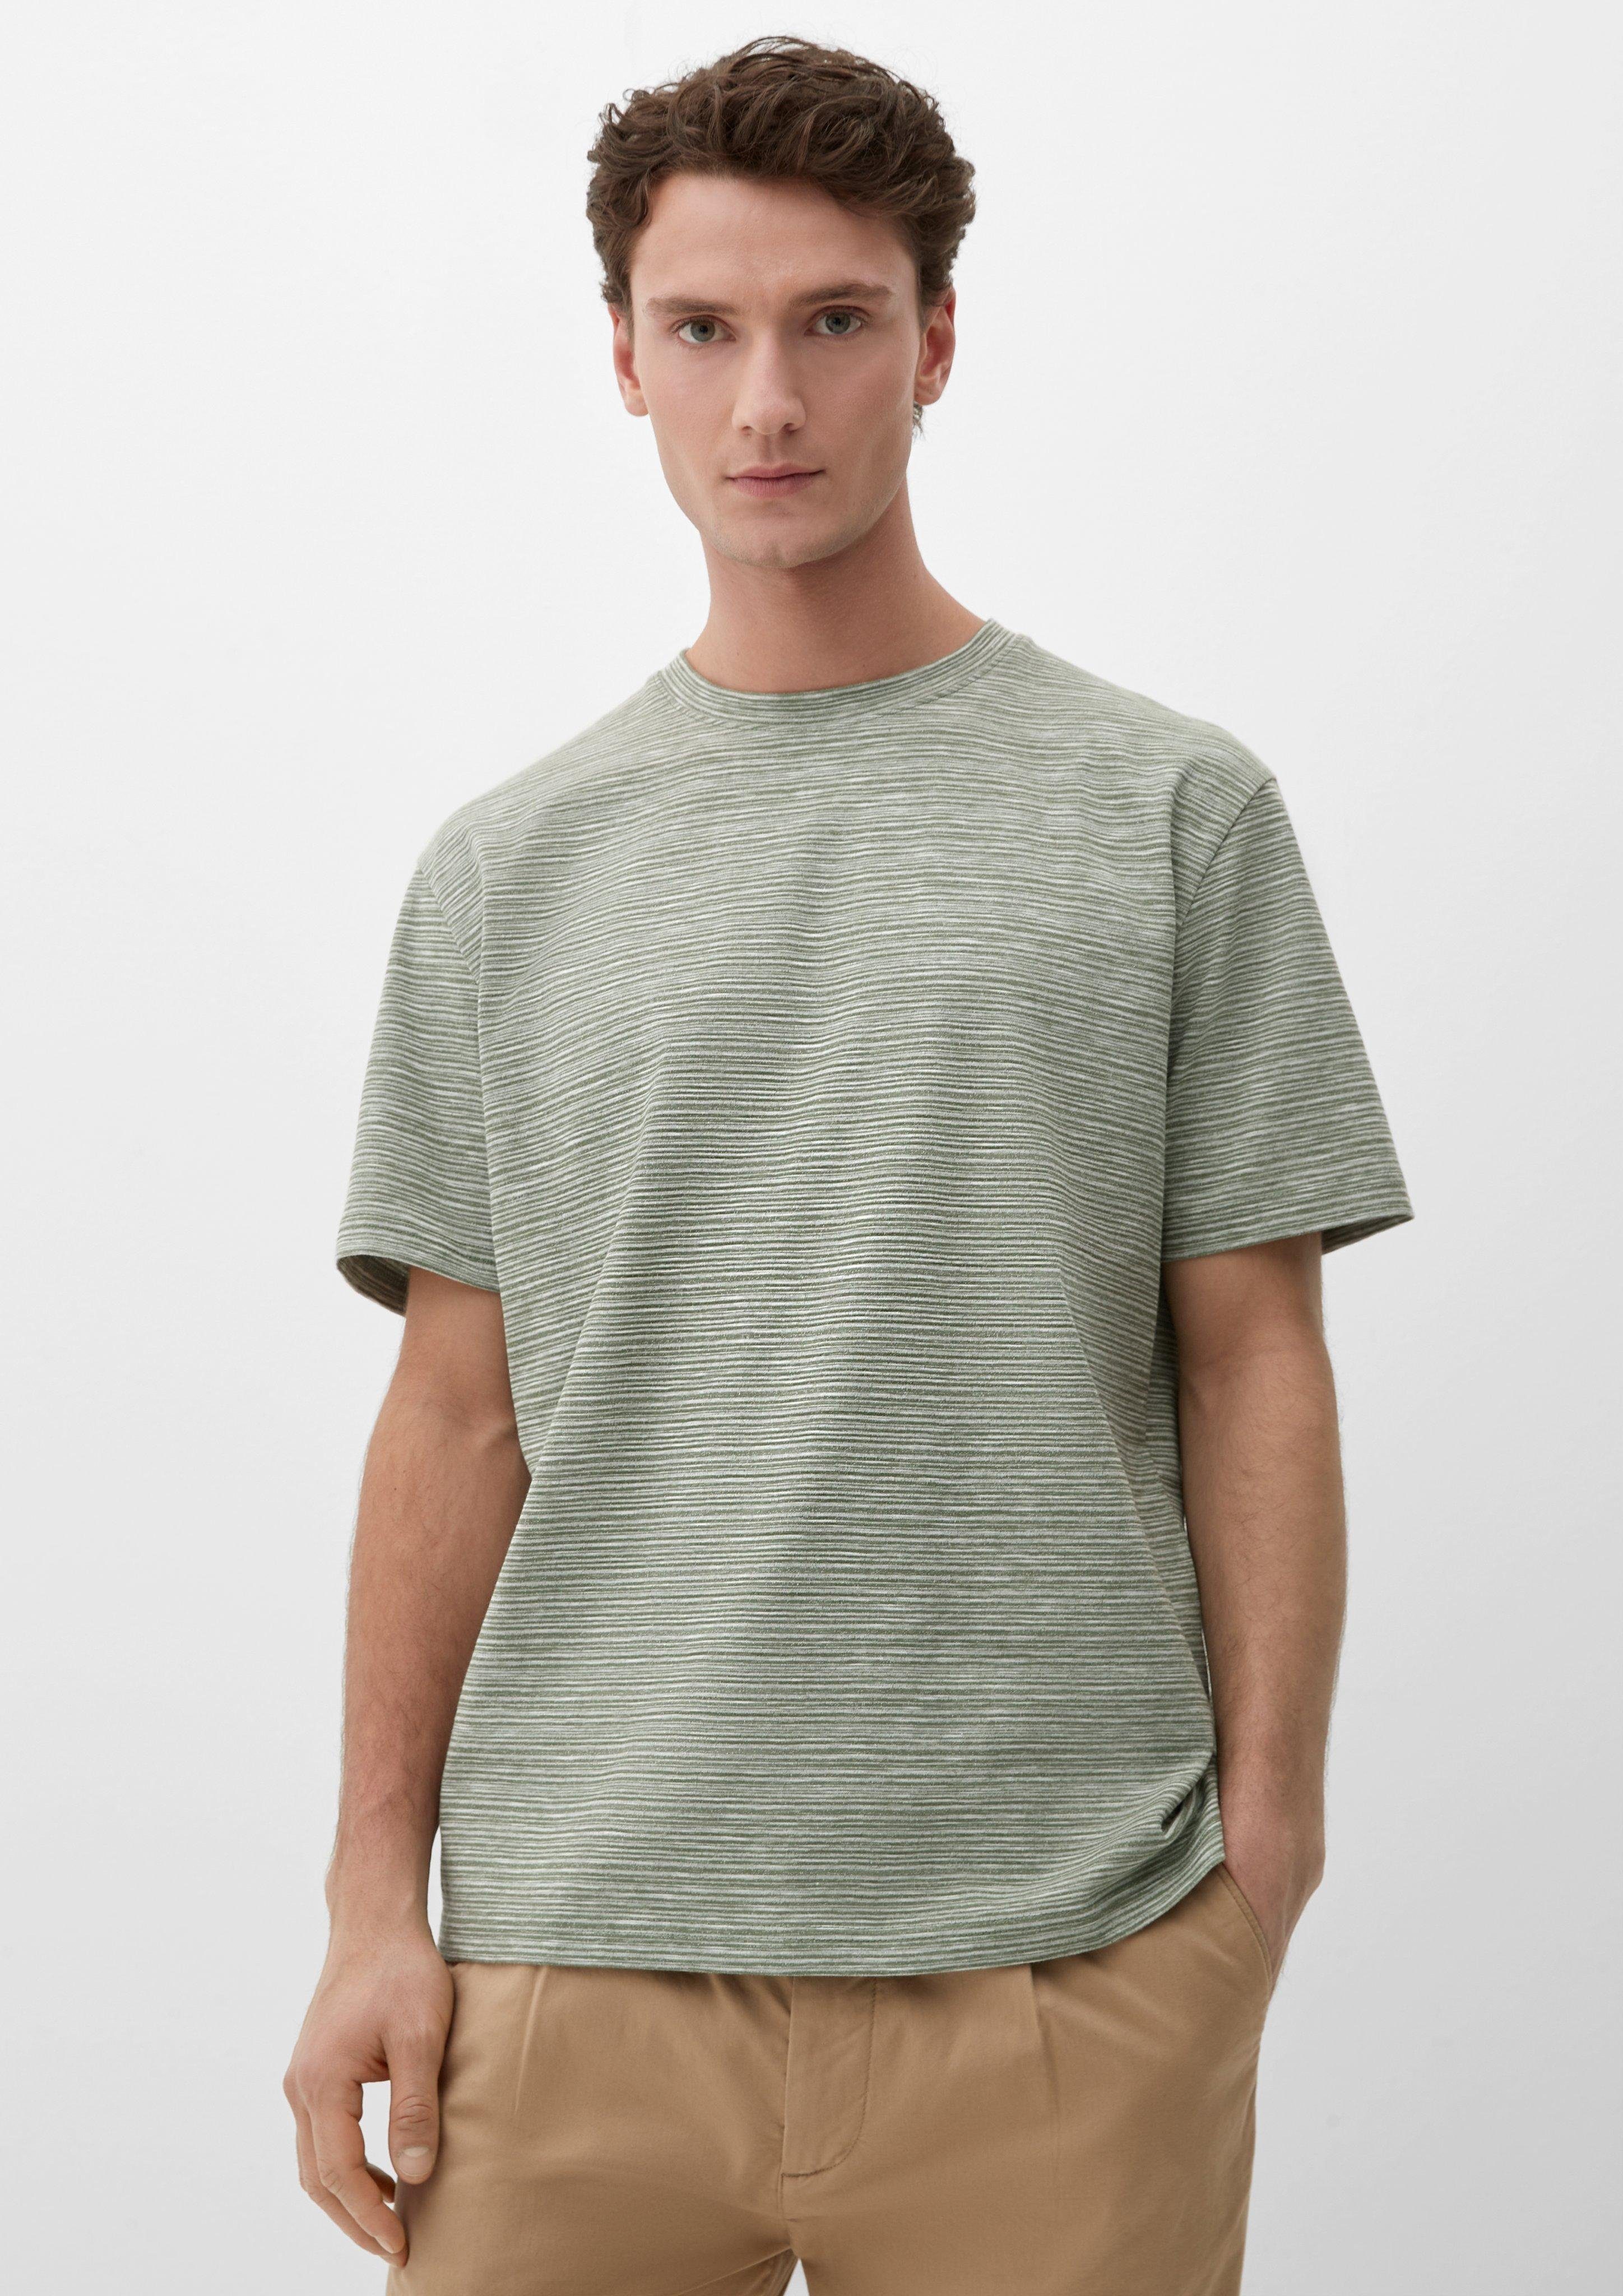 s.Oliver Kurzarmshirt T-Shirt aus Flammgarn-Jersey Blende helles olivgrün